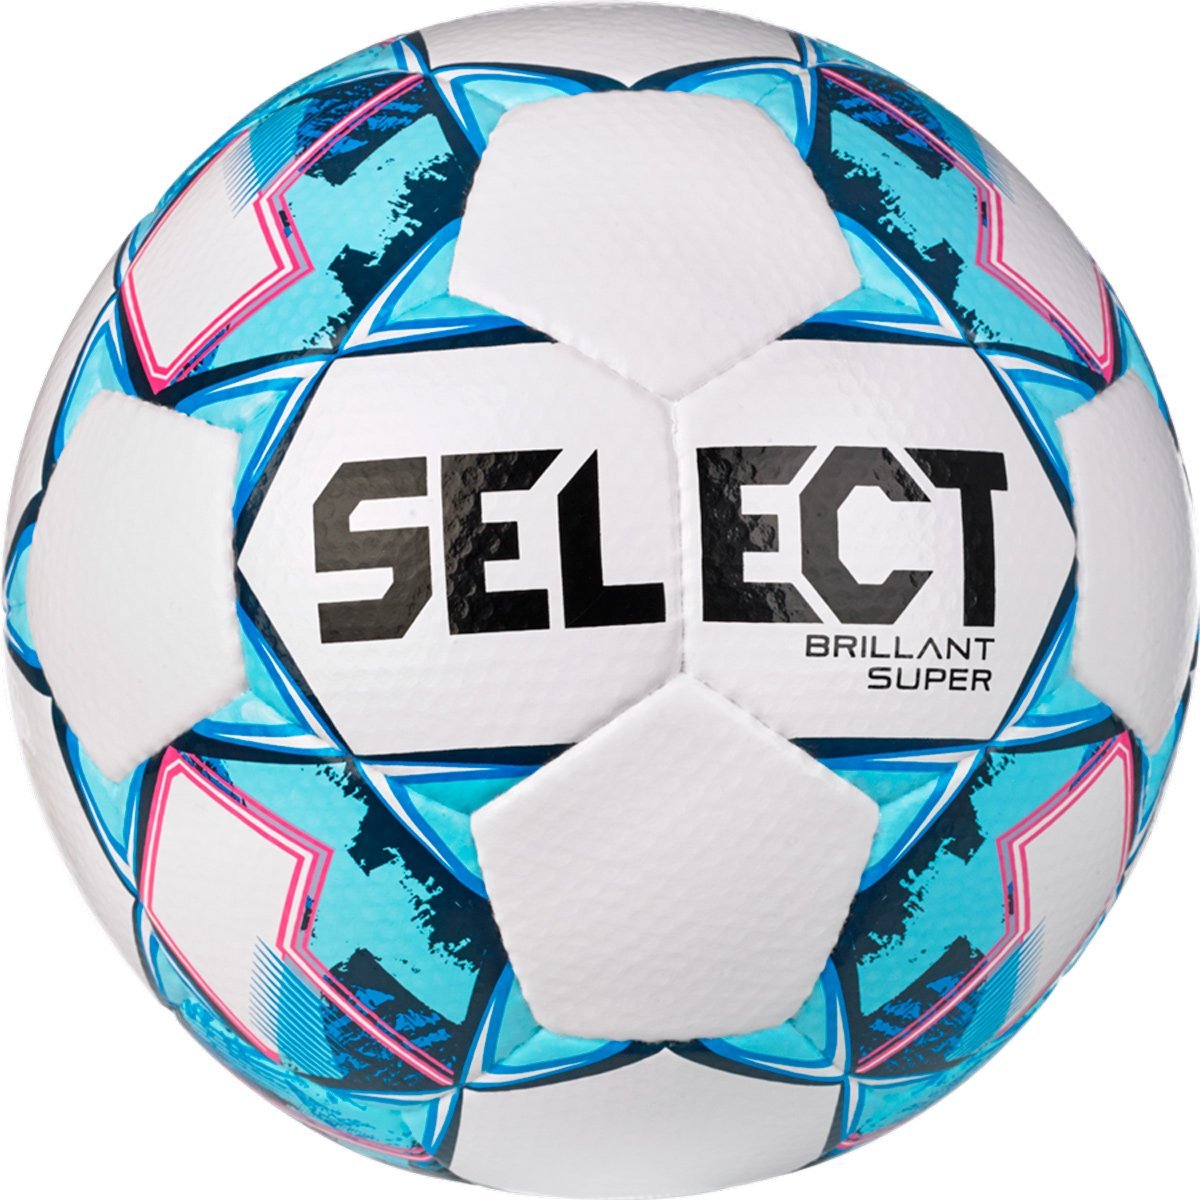 Select Brillant Super Version 22 Fodbold thumbnail